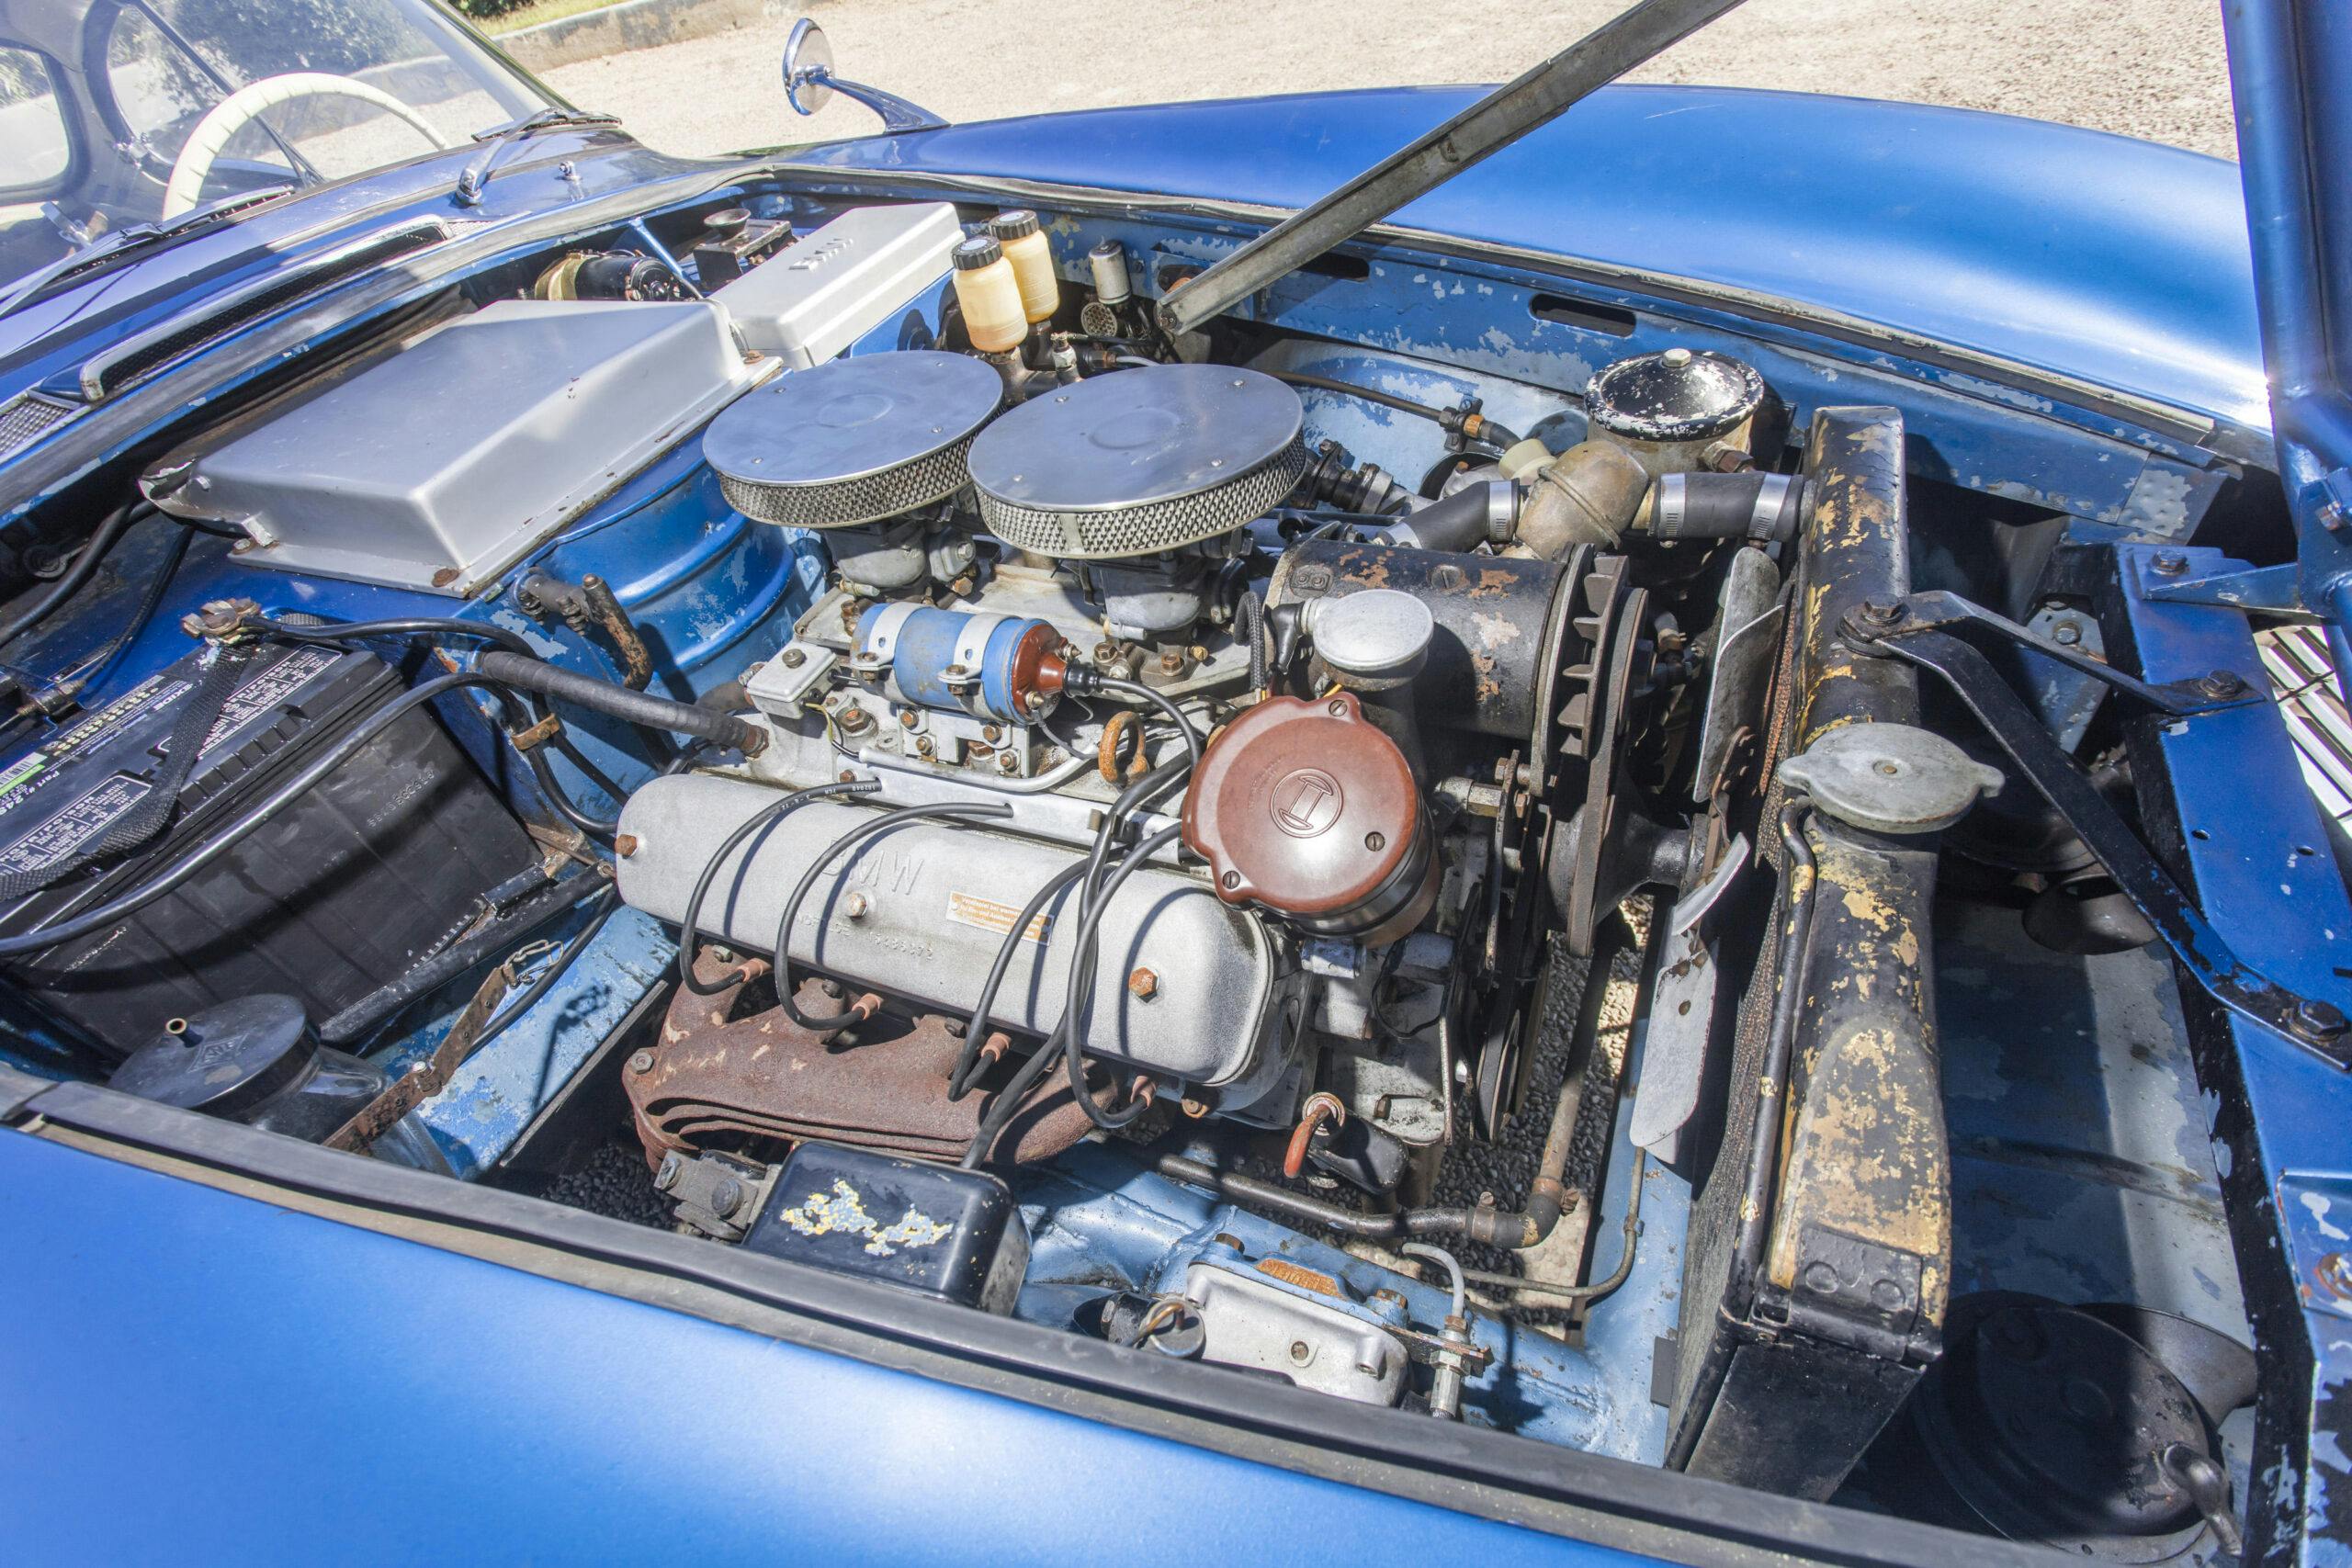 BMW 507 engine